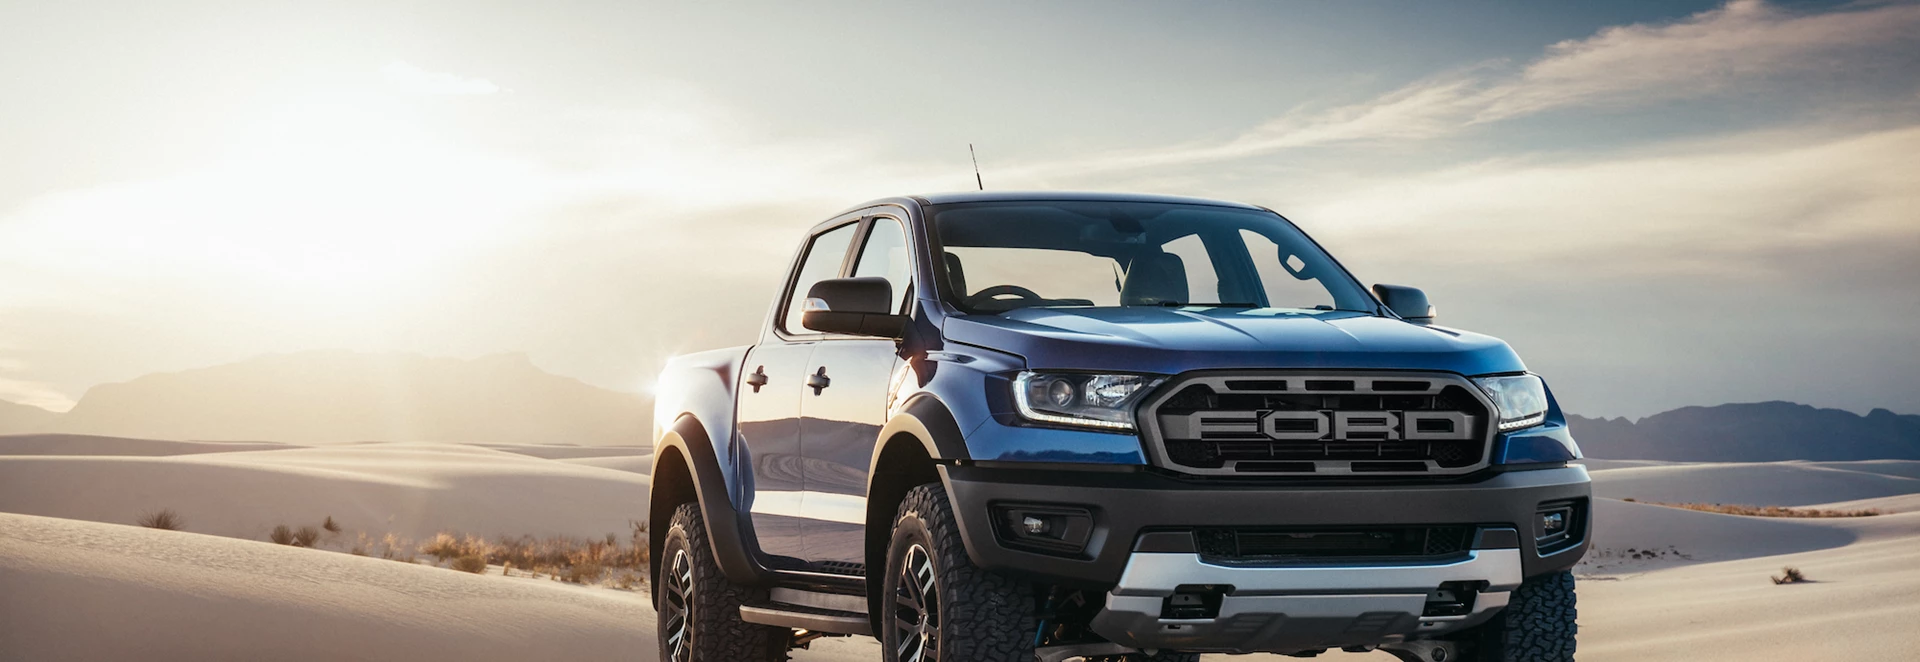 High-performance Ford Ranger Raptor pick-up truck revealed